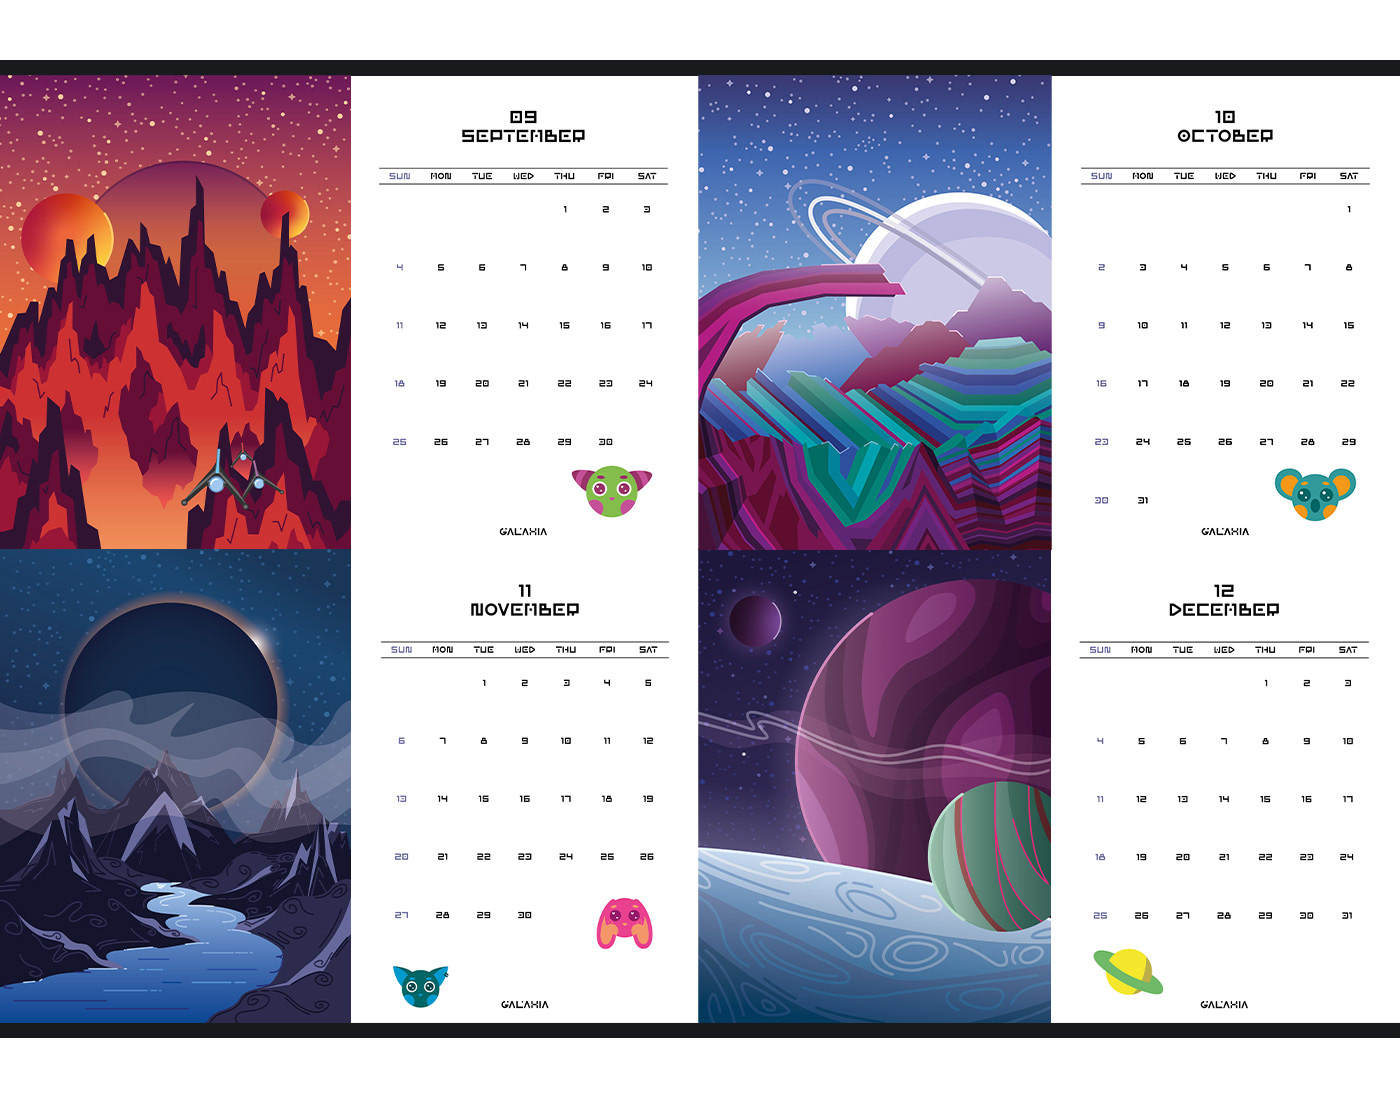 Album calendar Calendar 2022 galaxy kpop merchandise new year photocard season's greetings universe